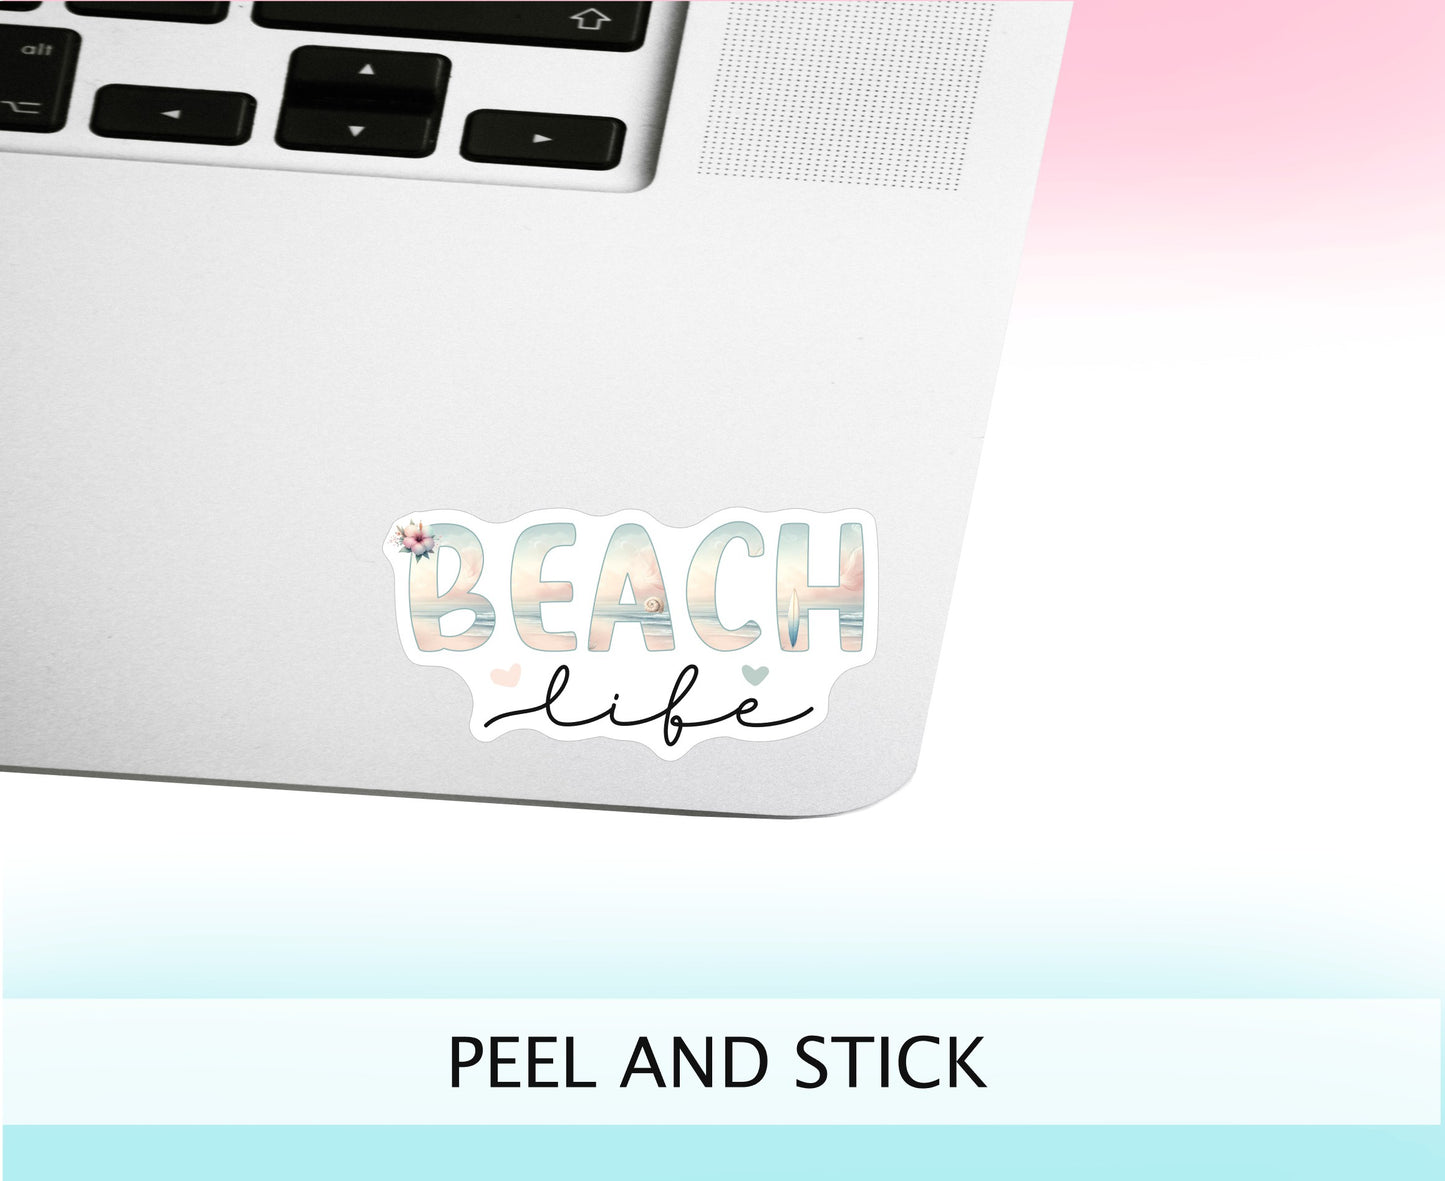 BEACH LIFE sticker || Ocean, Summer, Surf Sticker, coastal artwork nature sticker beach sticker floral